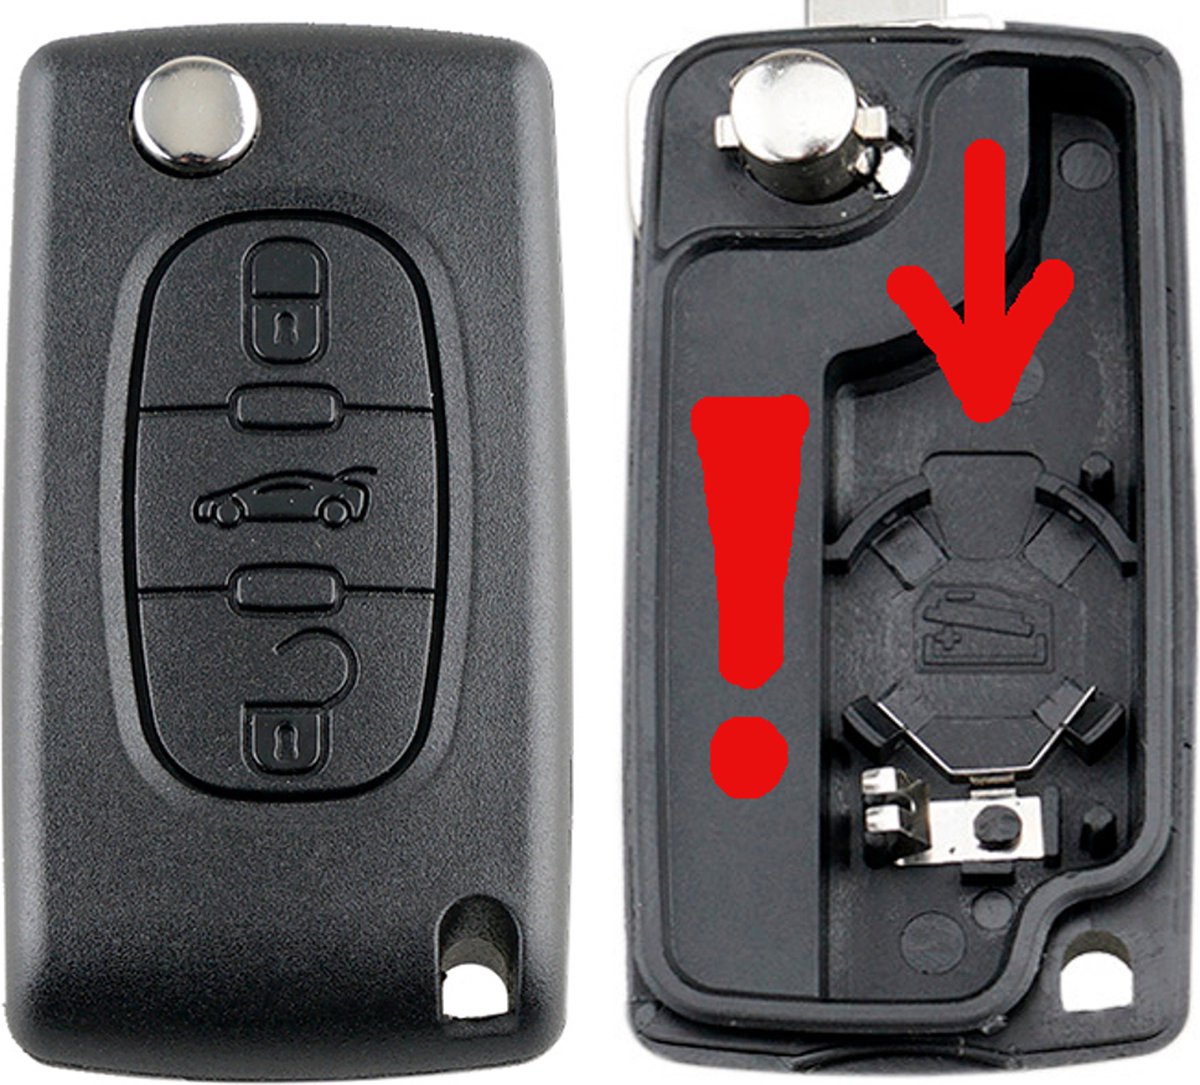 Peugeot - klapsleutel behuizing - 3 knoppen - middelste knop achterklep bediening - HU83 sleutelbaard met zijgroef - CE0536 met batterijhouder in de achterdeksel